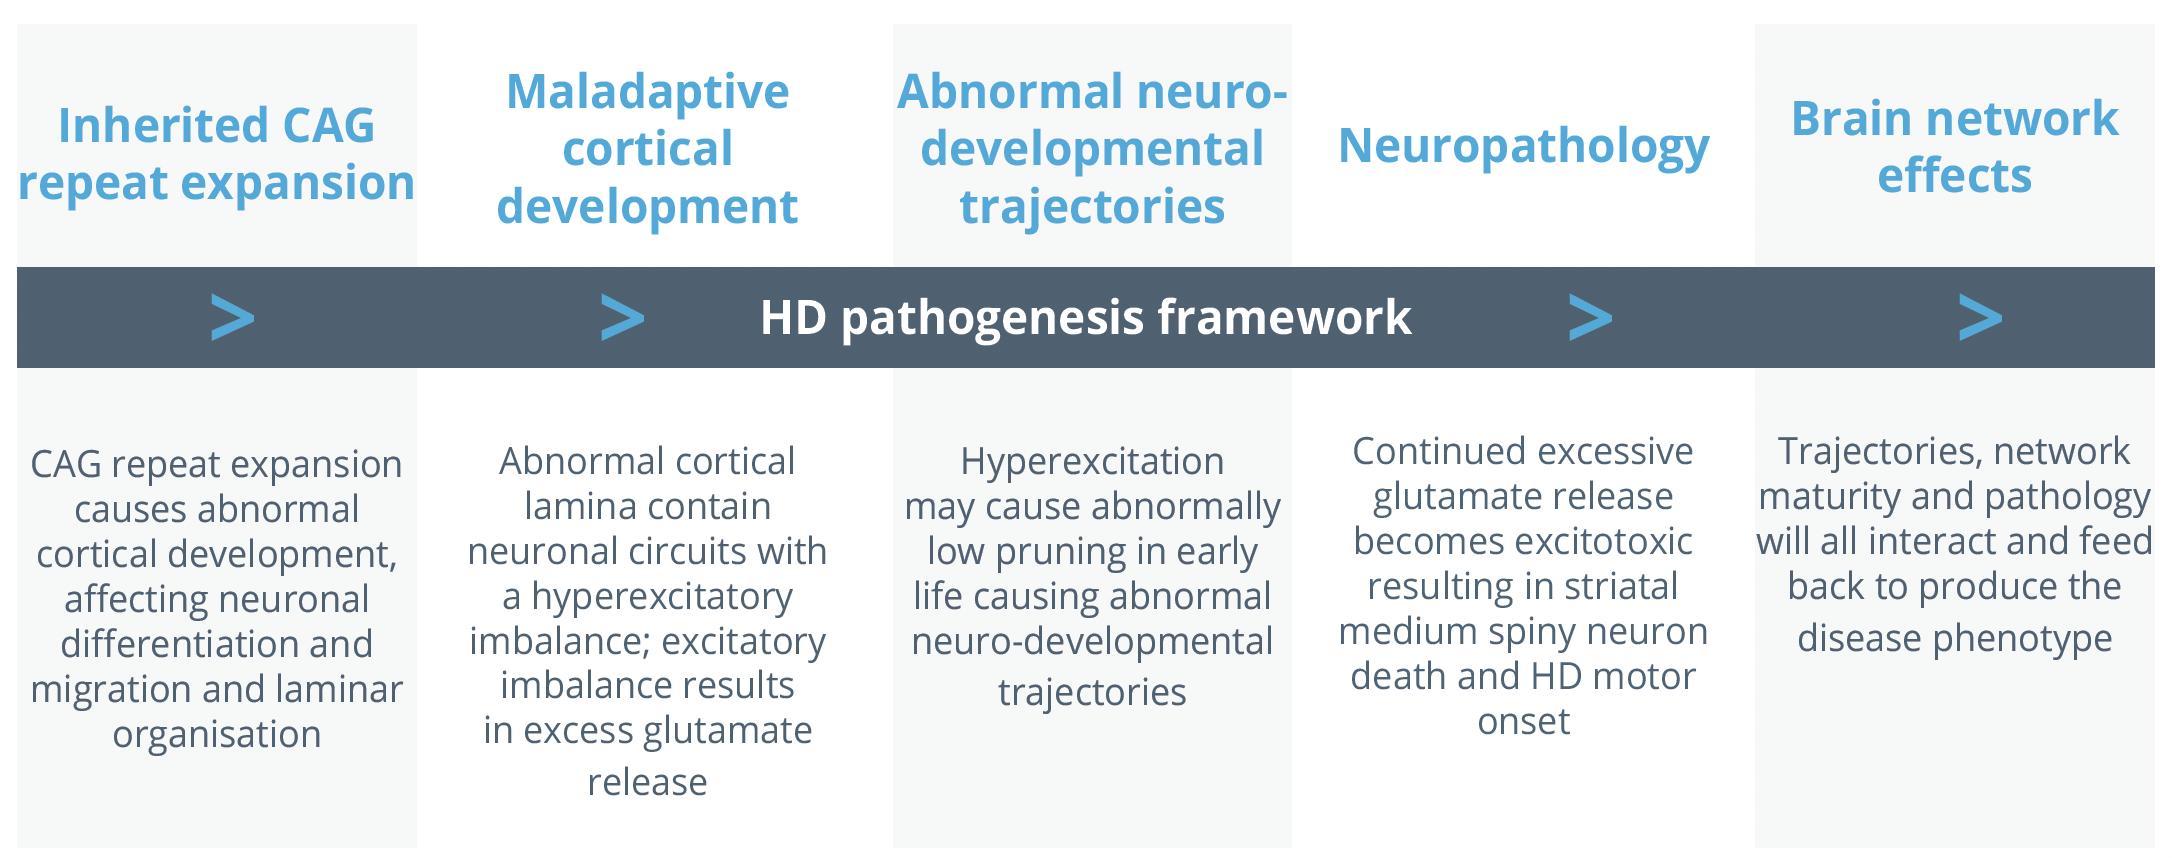 HD pathogenesis framework including the role of genetics, abnormal cortical development and neuropathology